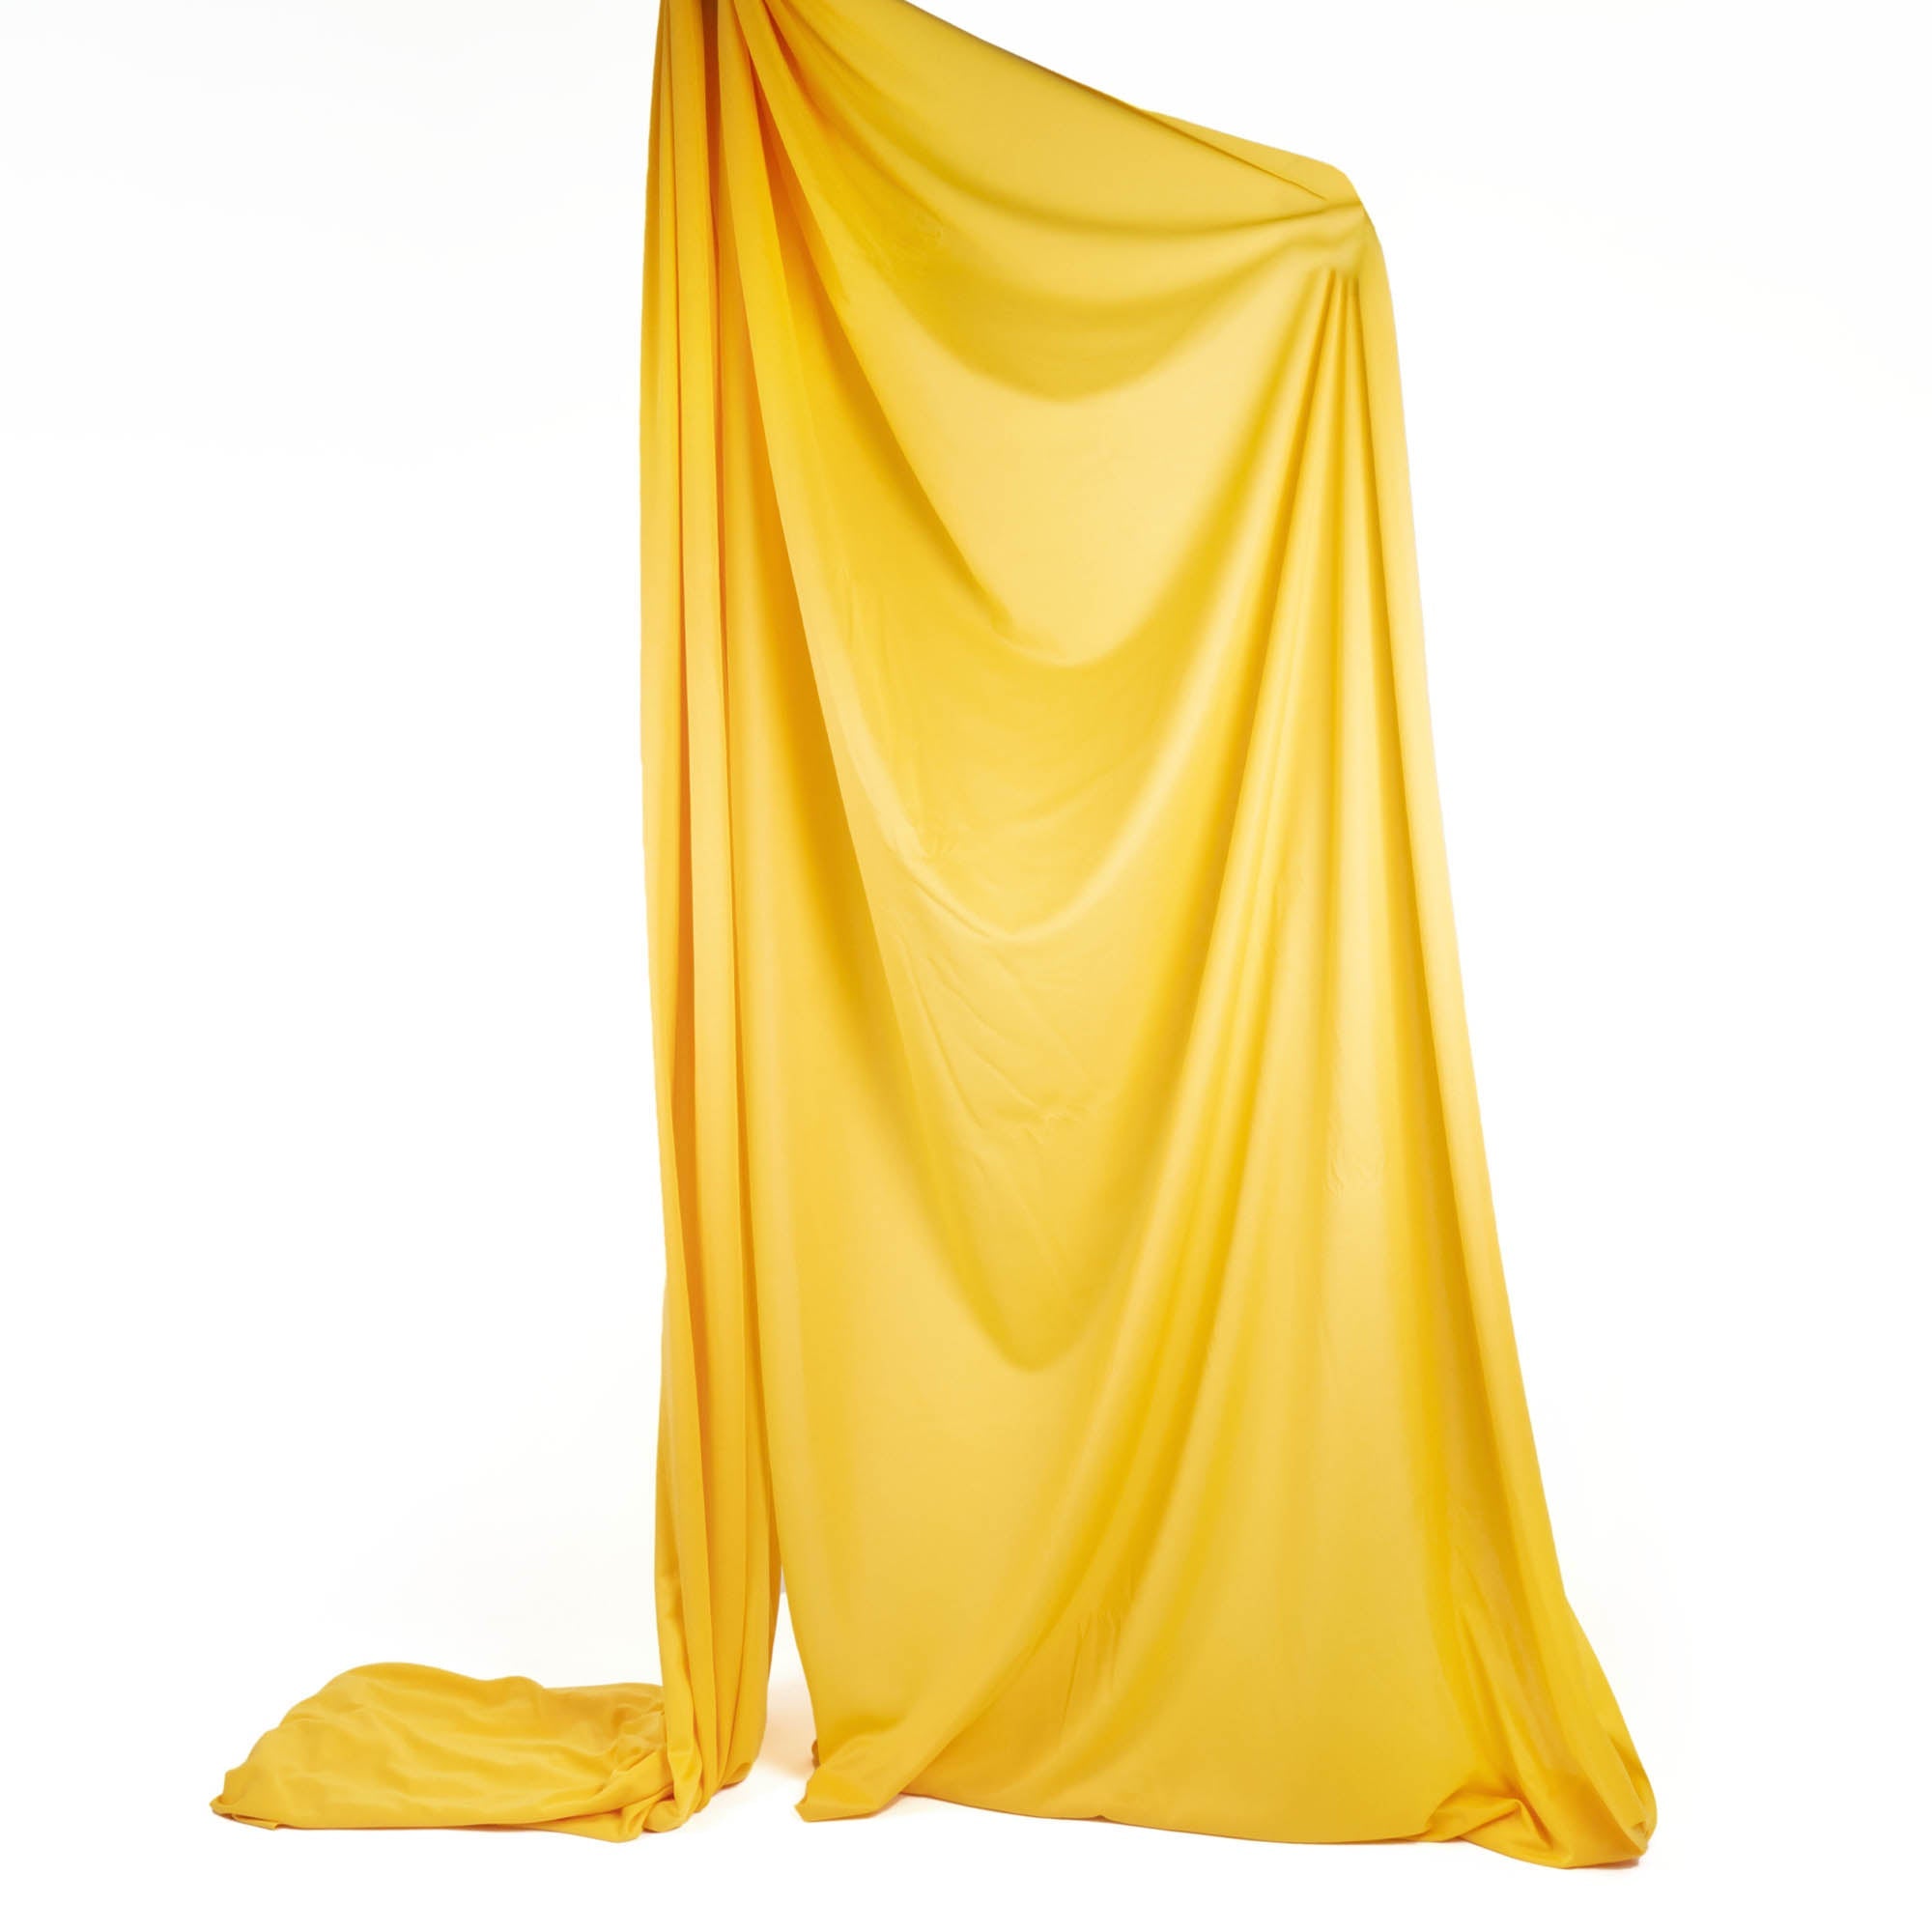 Golden yellow silk rigged